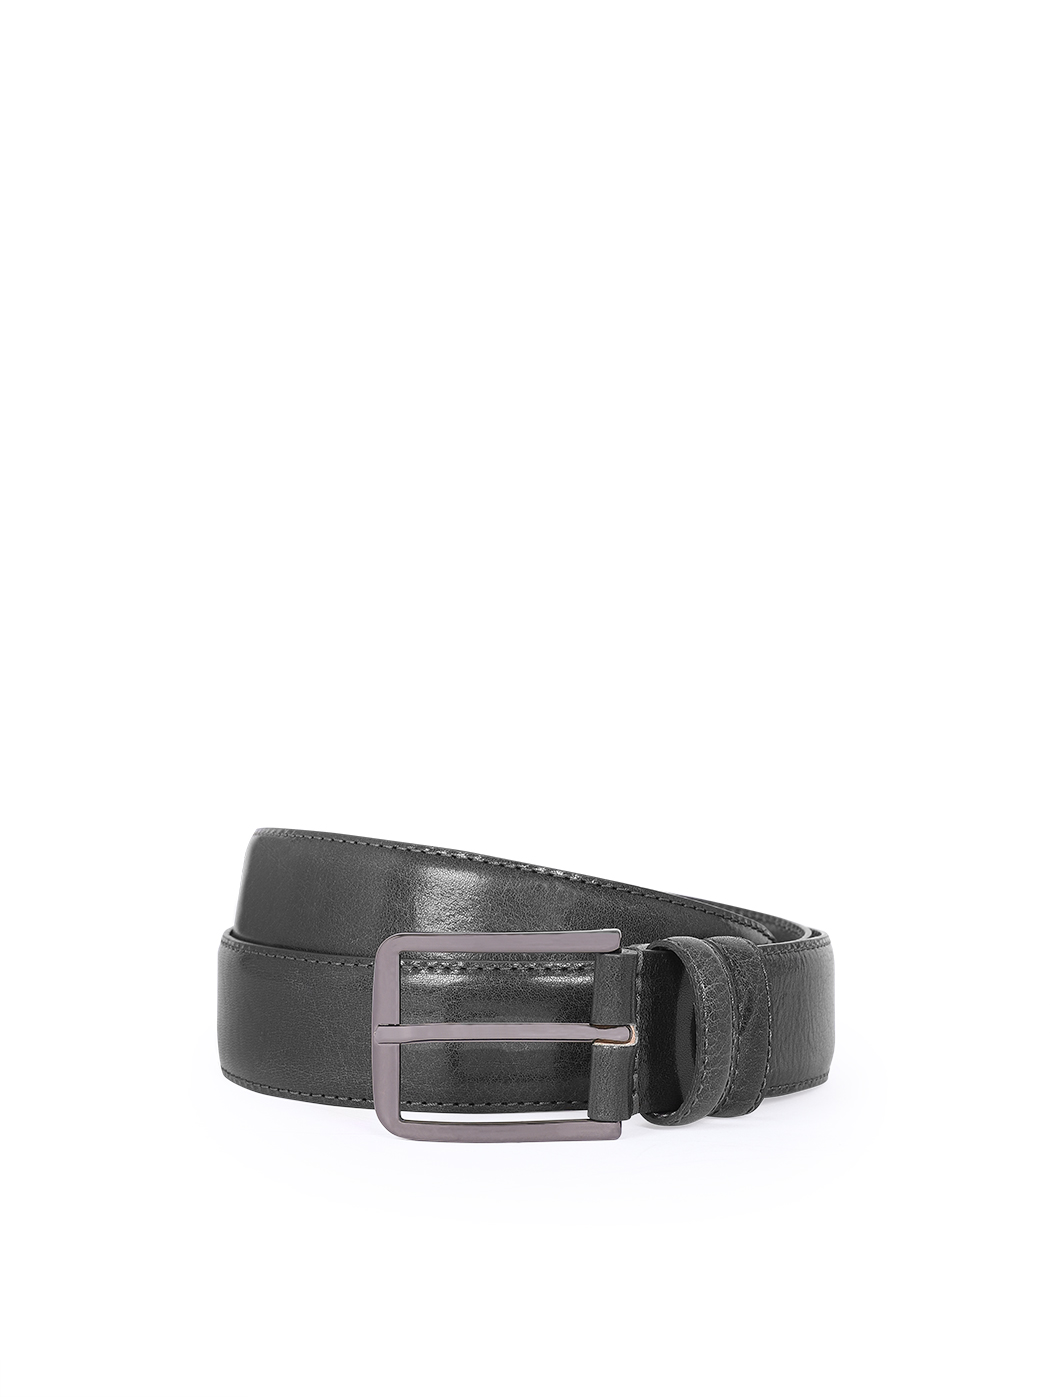 Everyday 3.5 cm Classic Stitched Leather Belt Black